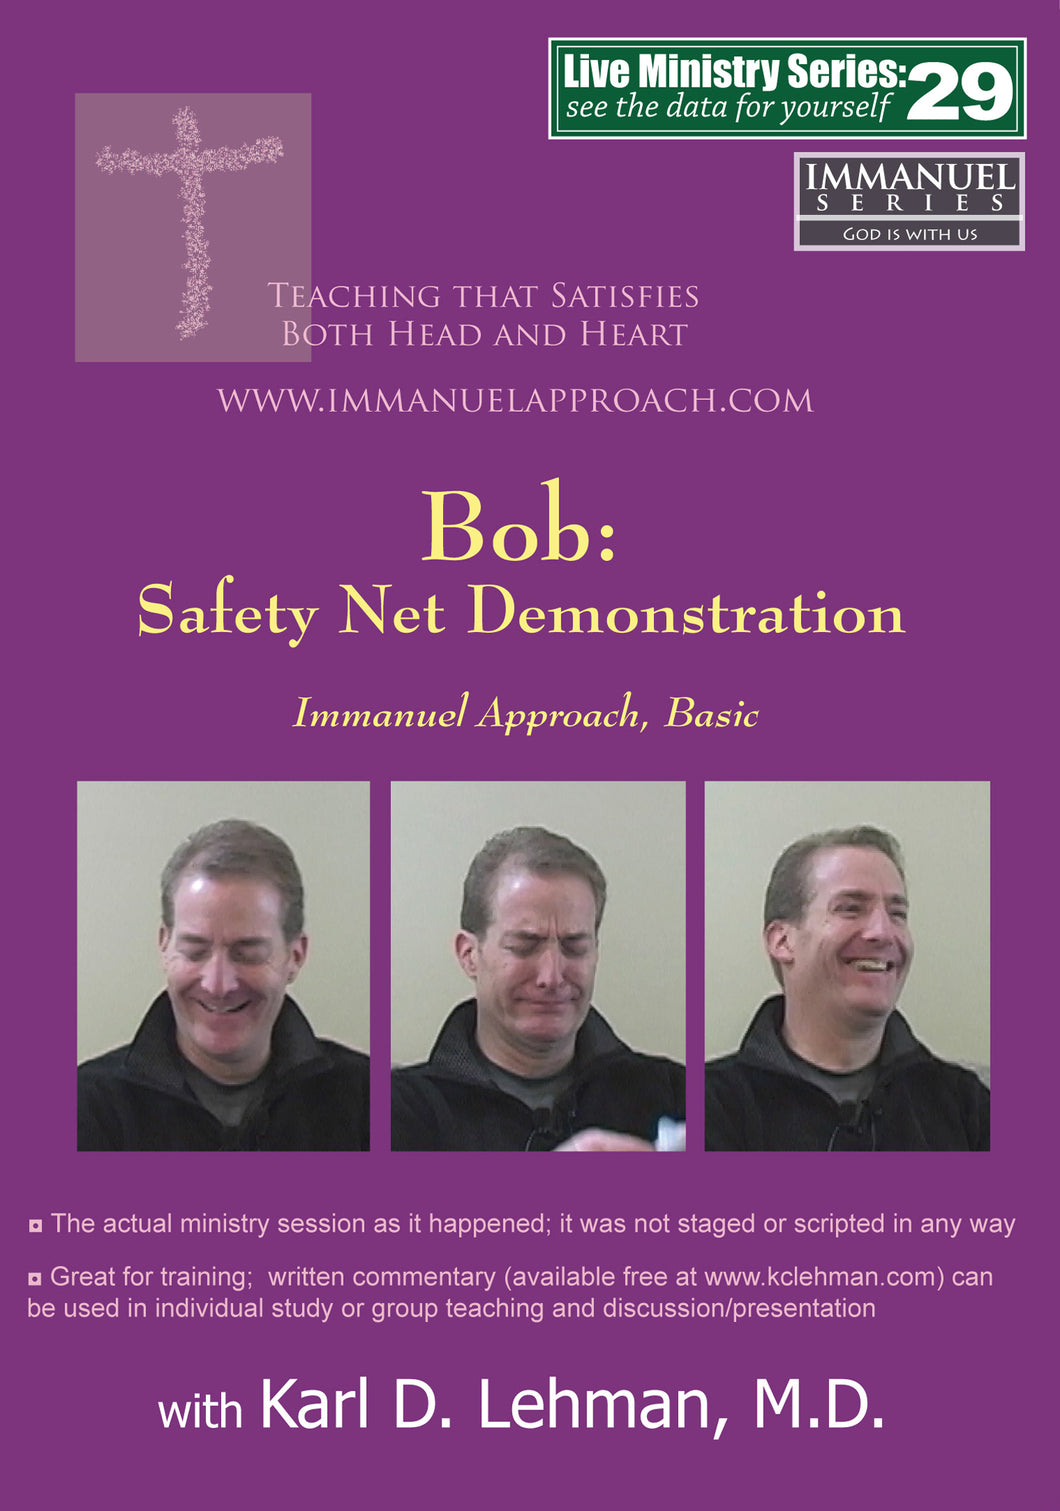 Bob: Safety Net Demonstration (LMS #29)